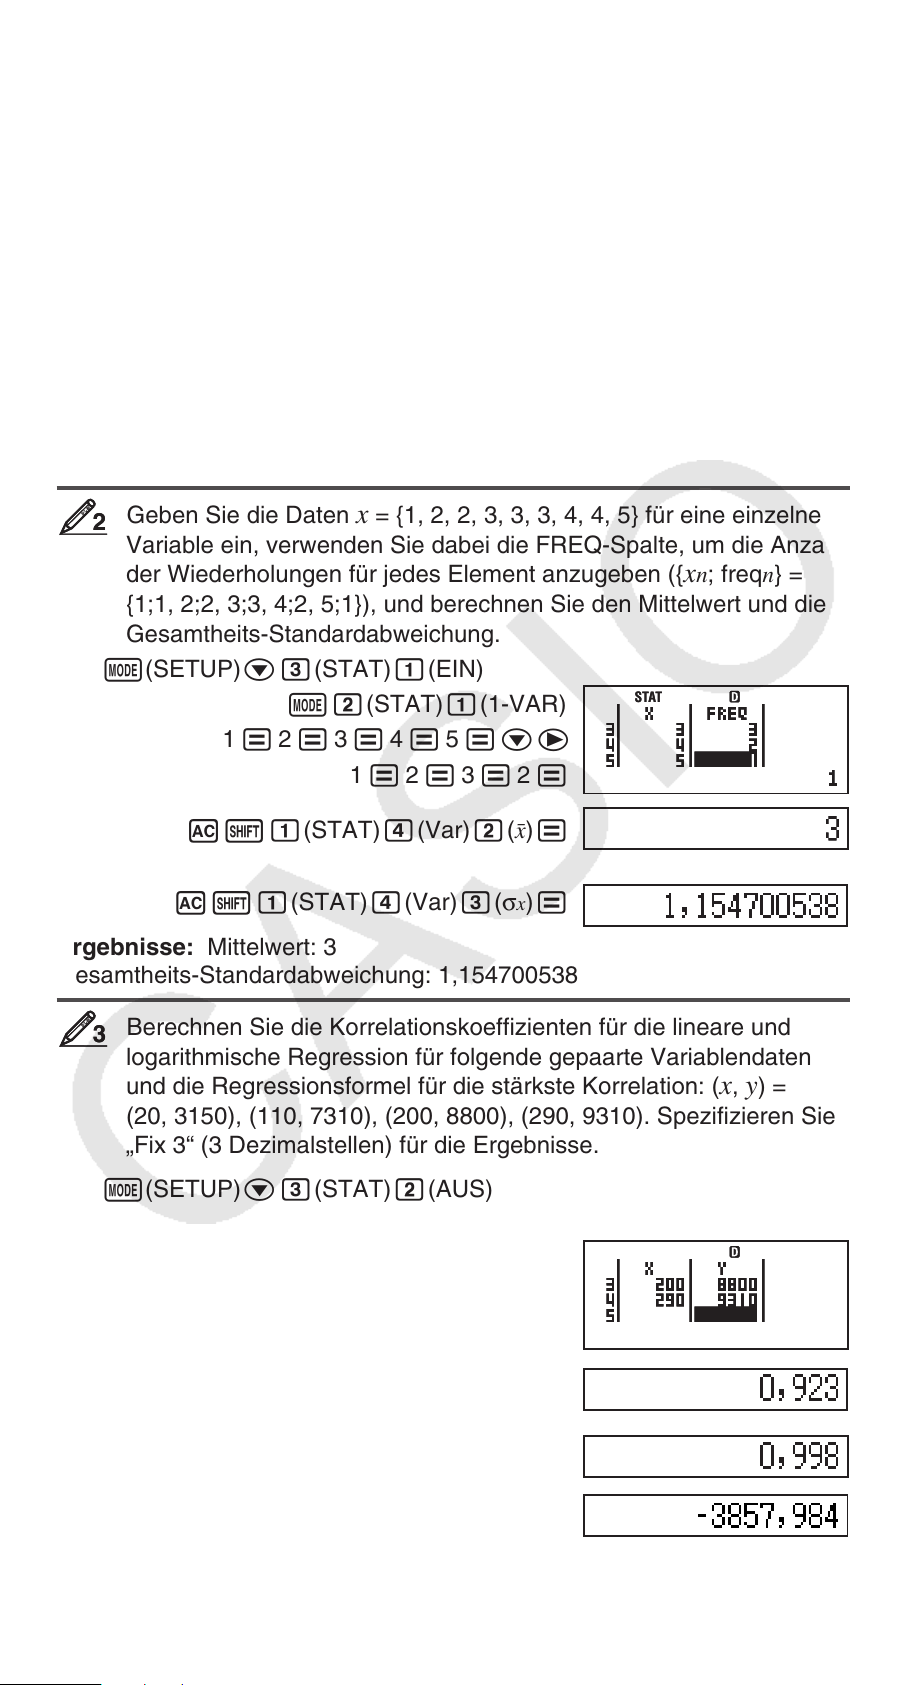 manual-casio-fx-82de-plus-page-22-of-32-german